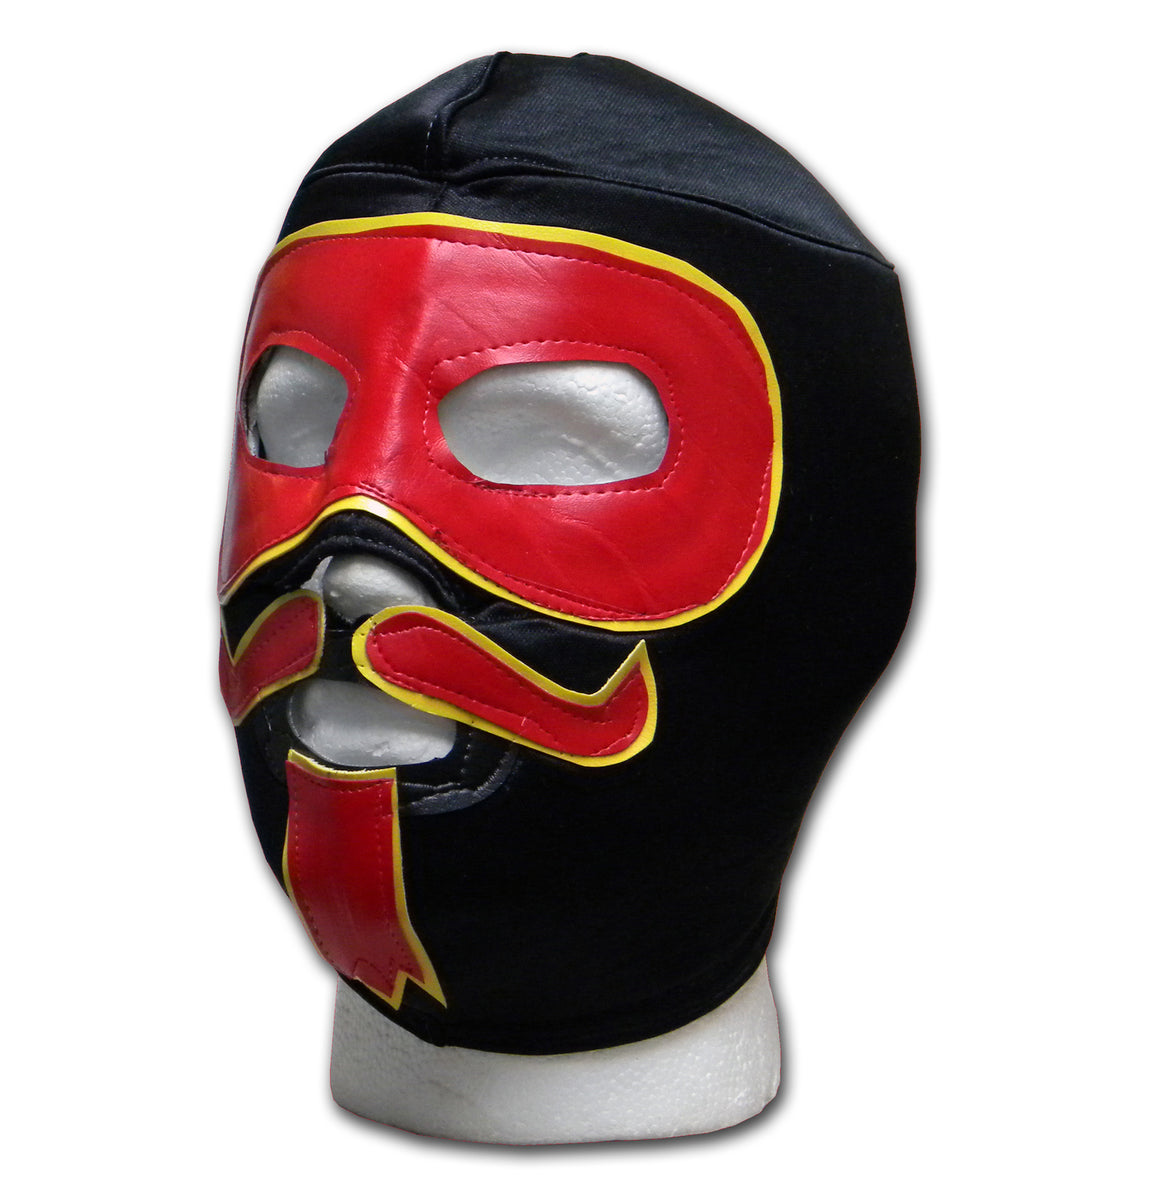 Luchadora Bandito Adult Luchador Wrestling Mask Lucha Libre